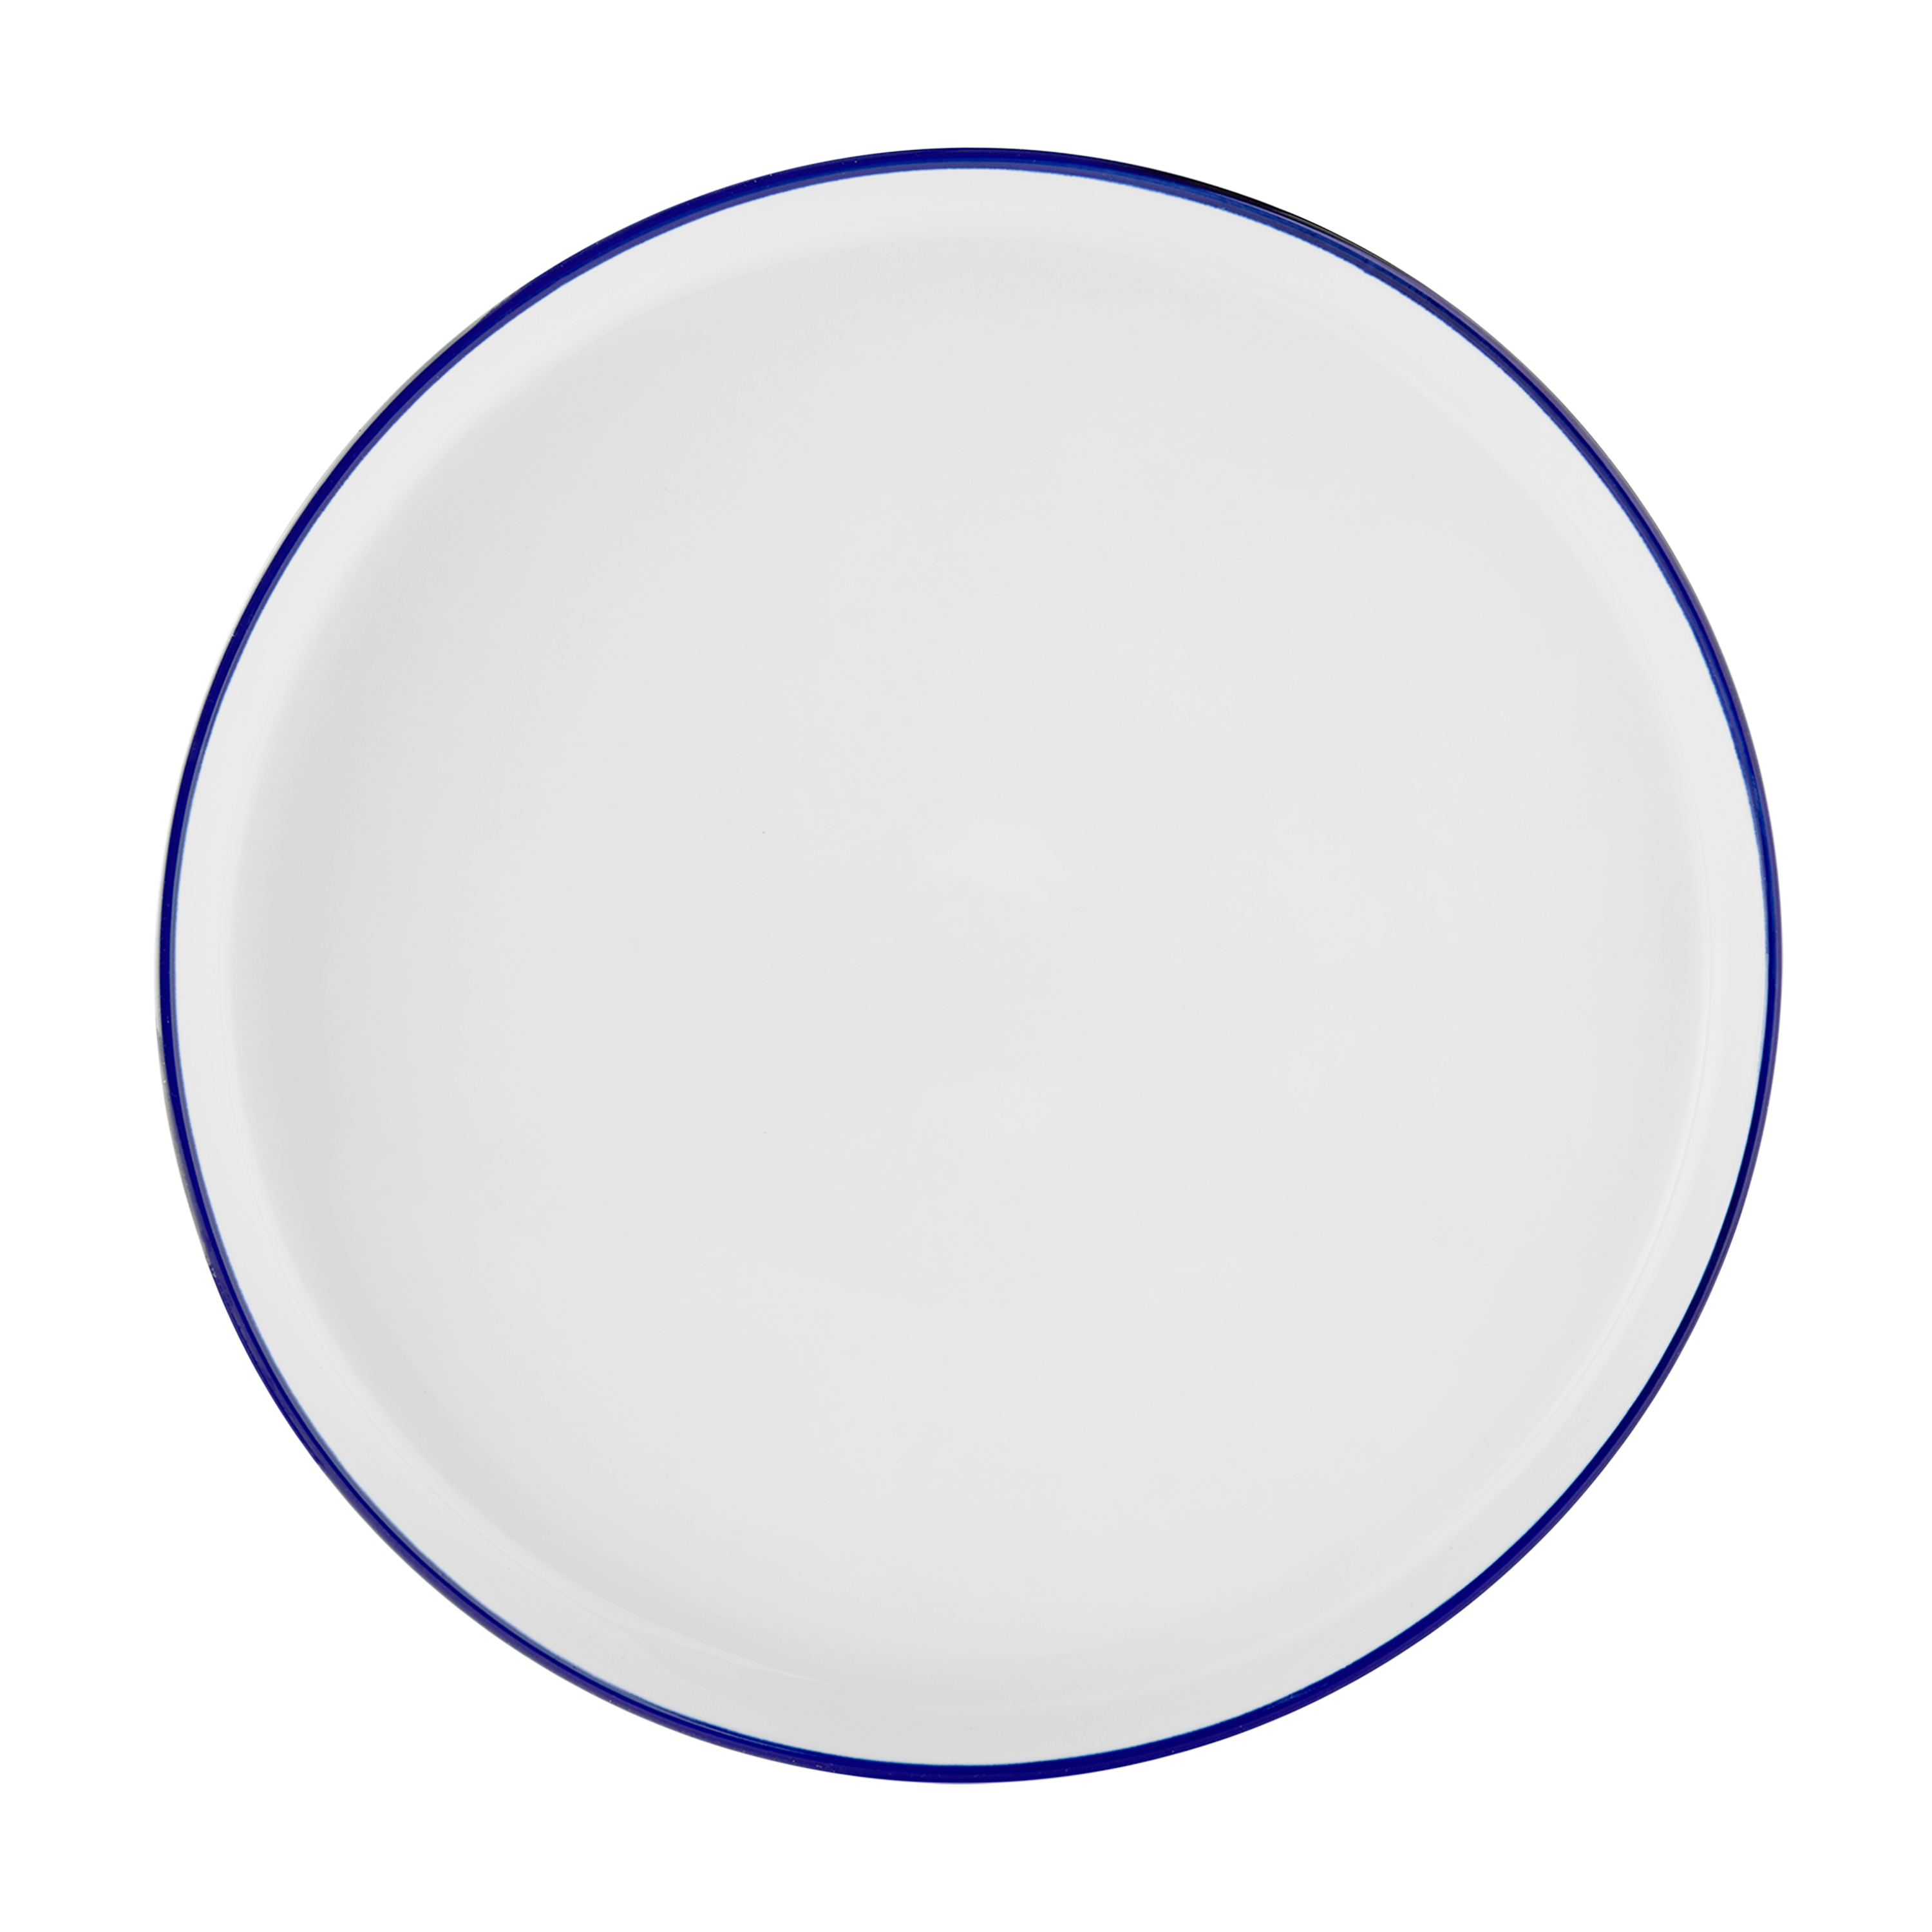 Mainstays 12-Piece Blue Rim Stoneware Dinnerware Set - image 4 of 7